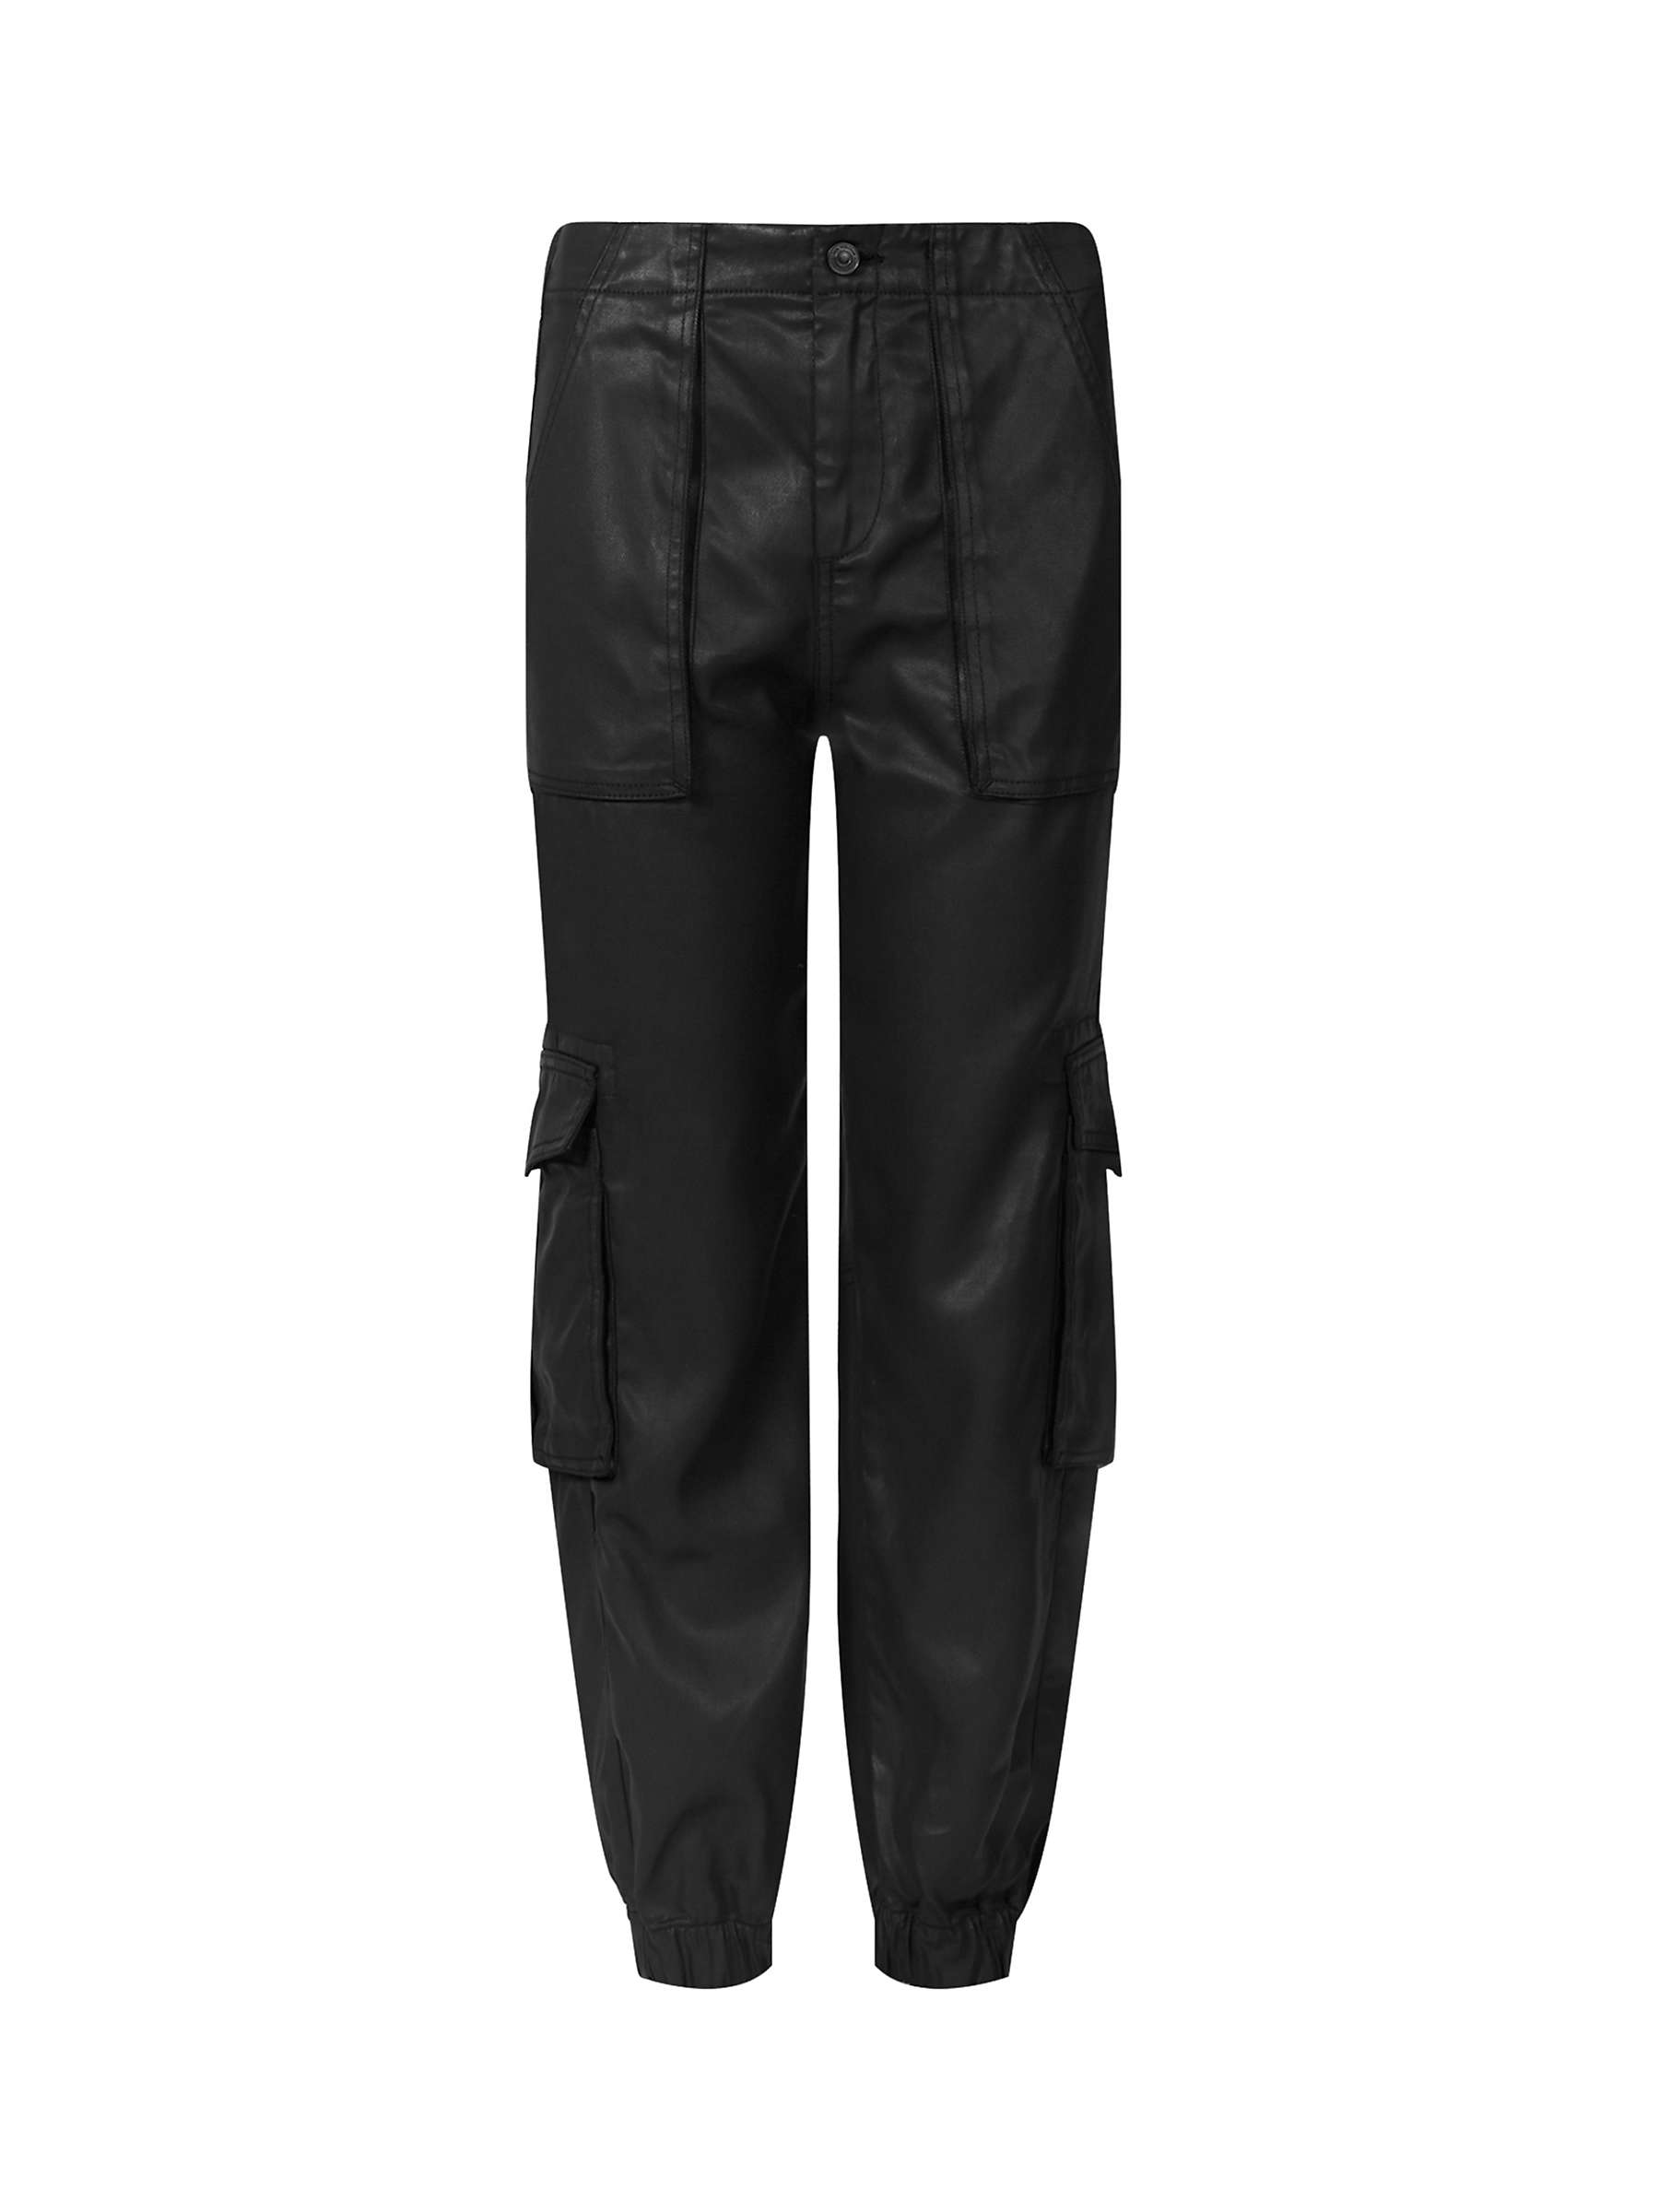 AllSaints Frieda Coated Cargo Trousers, Black at John Lewis & Partners